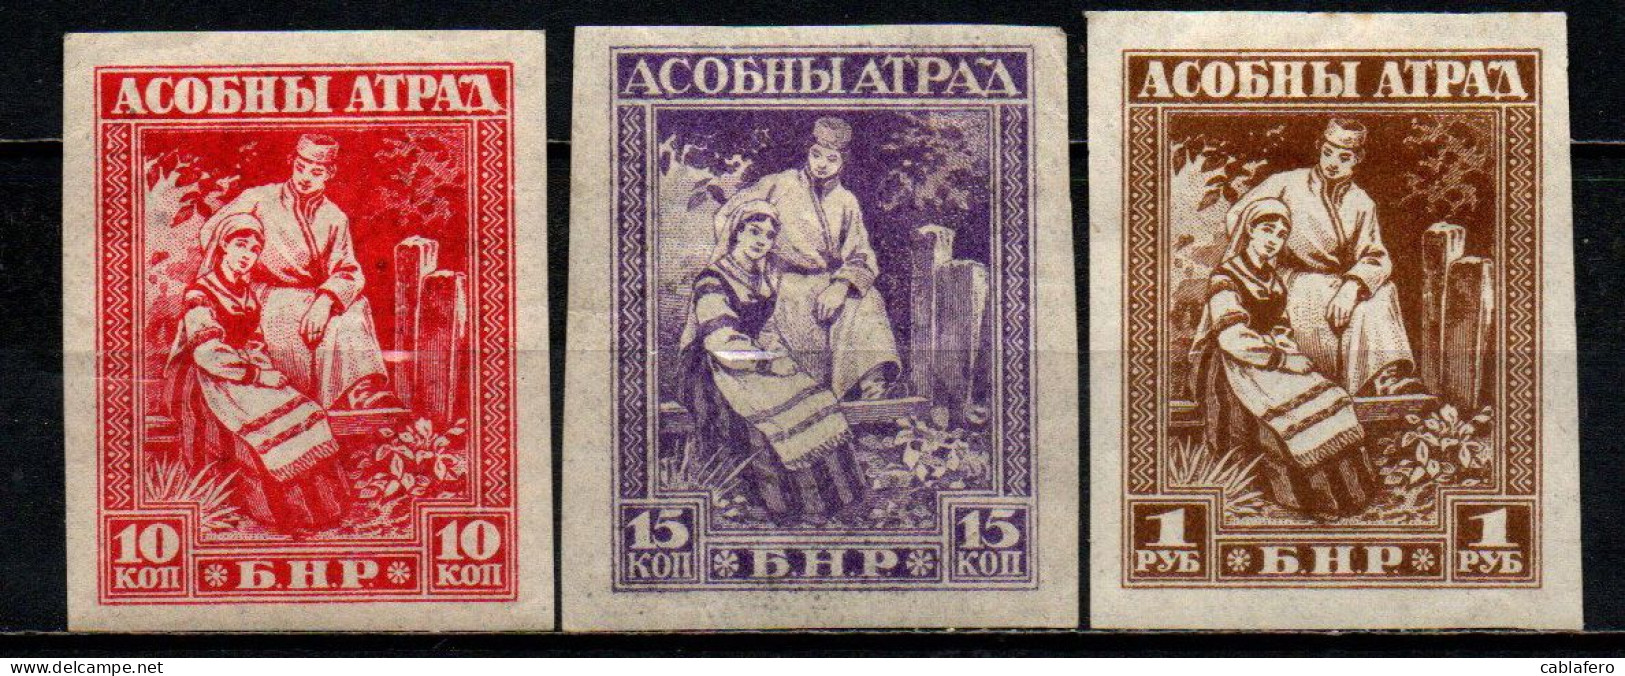 URSS - ARMATA DELL'OVEST - 1922 - COSTUMI REGIONALI - IMPERFORATED - MH - Westarmee